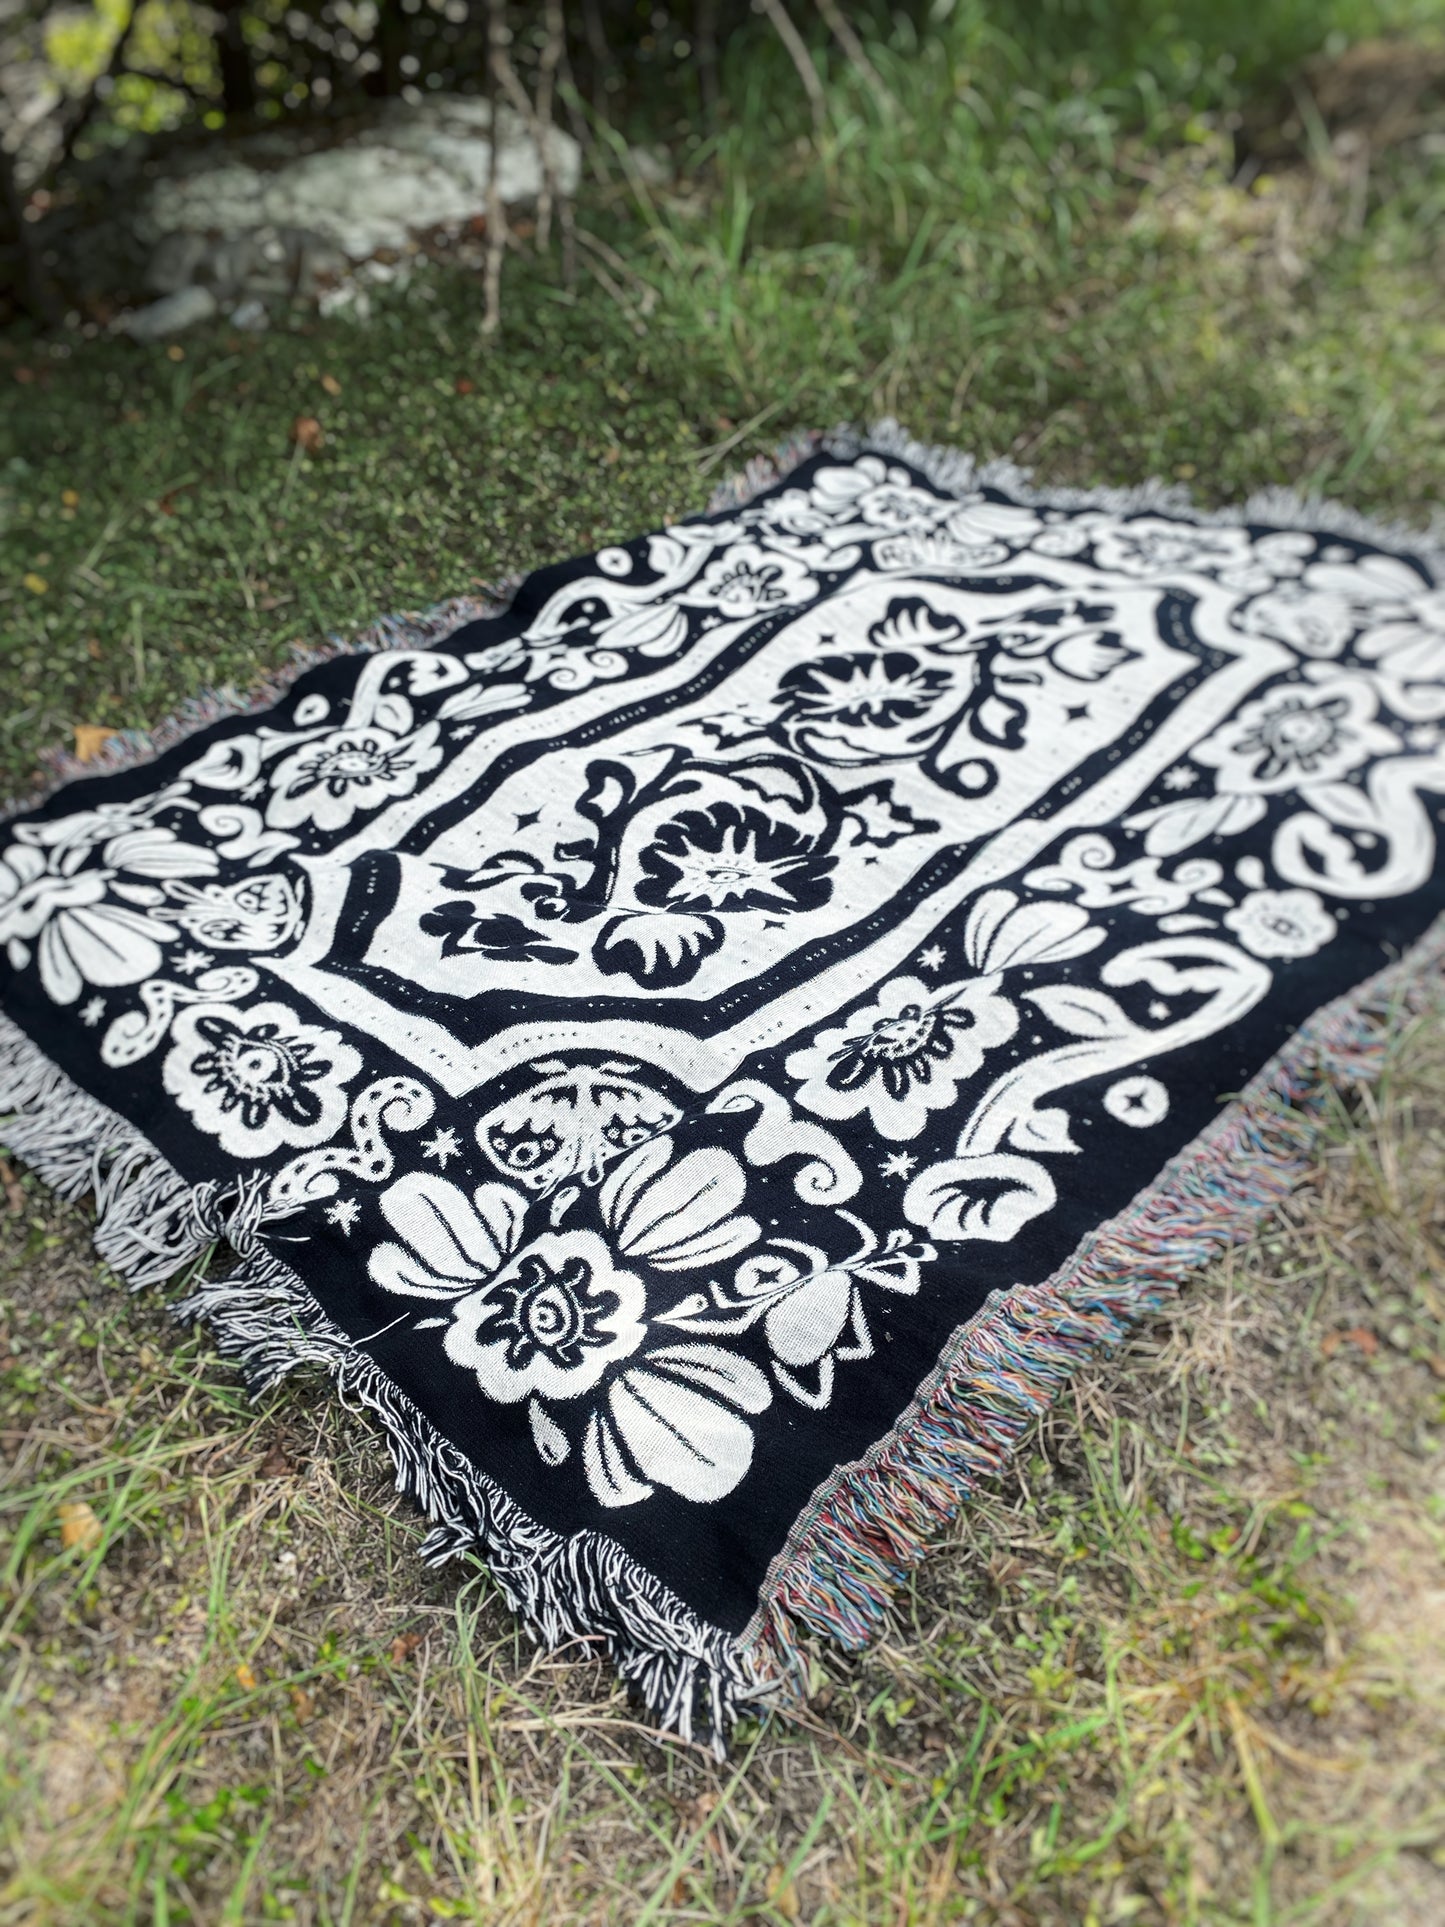 Witches' Garden Woven Throw Blanket